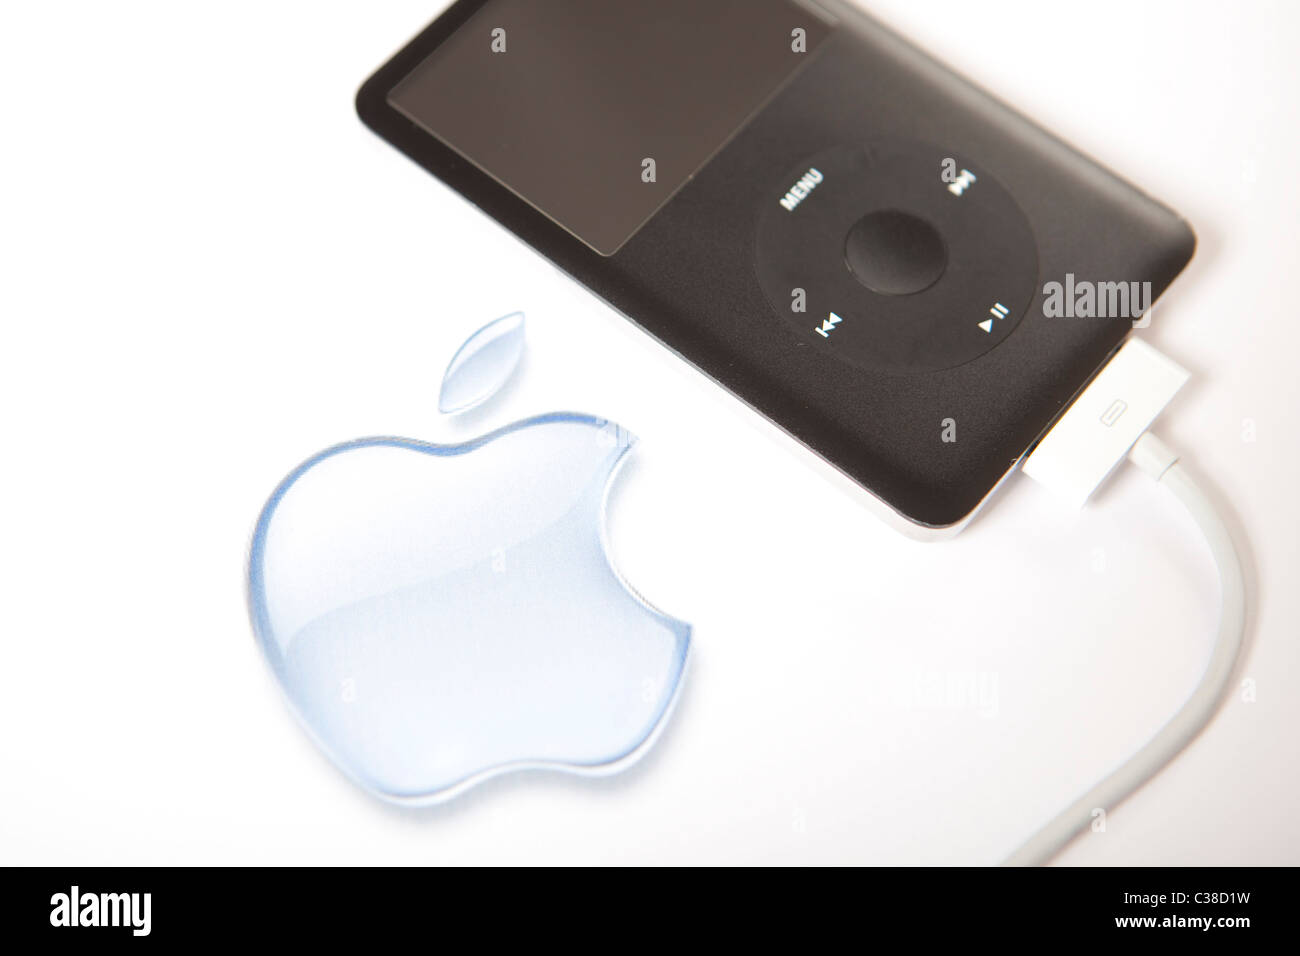 Illustrative image of an Apple iPod. Stock Photo